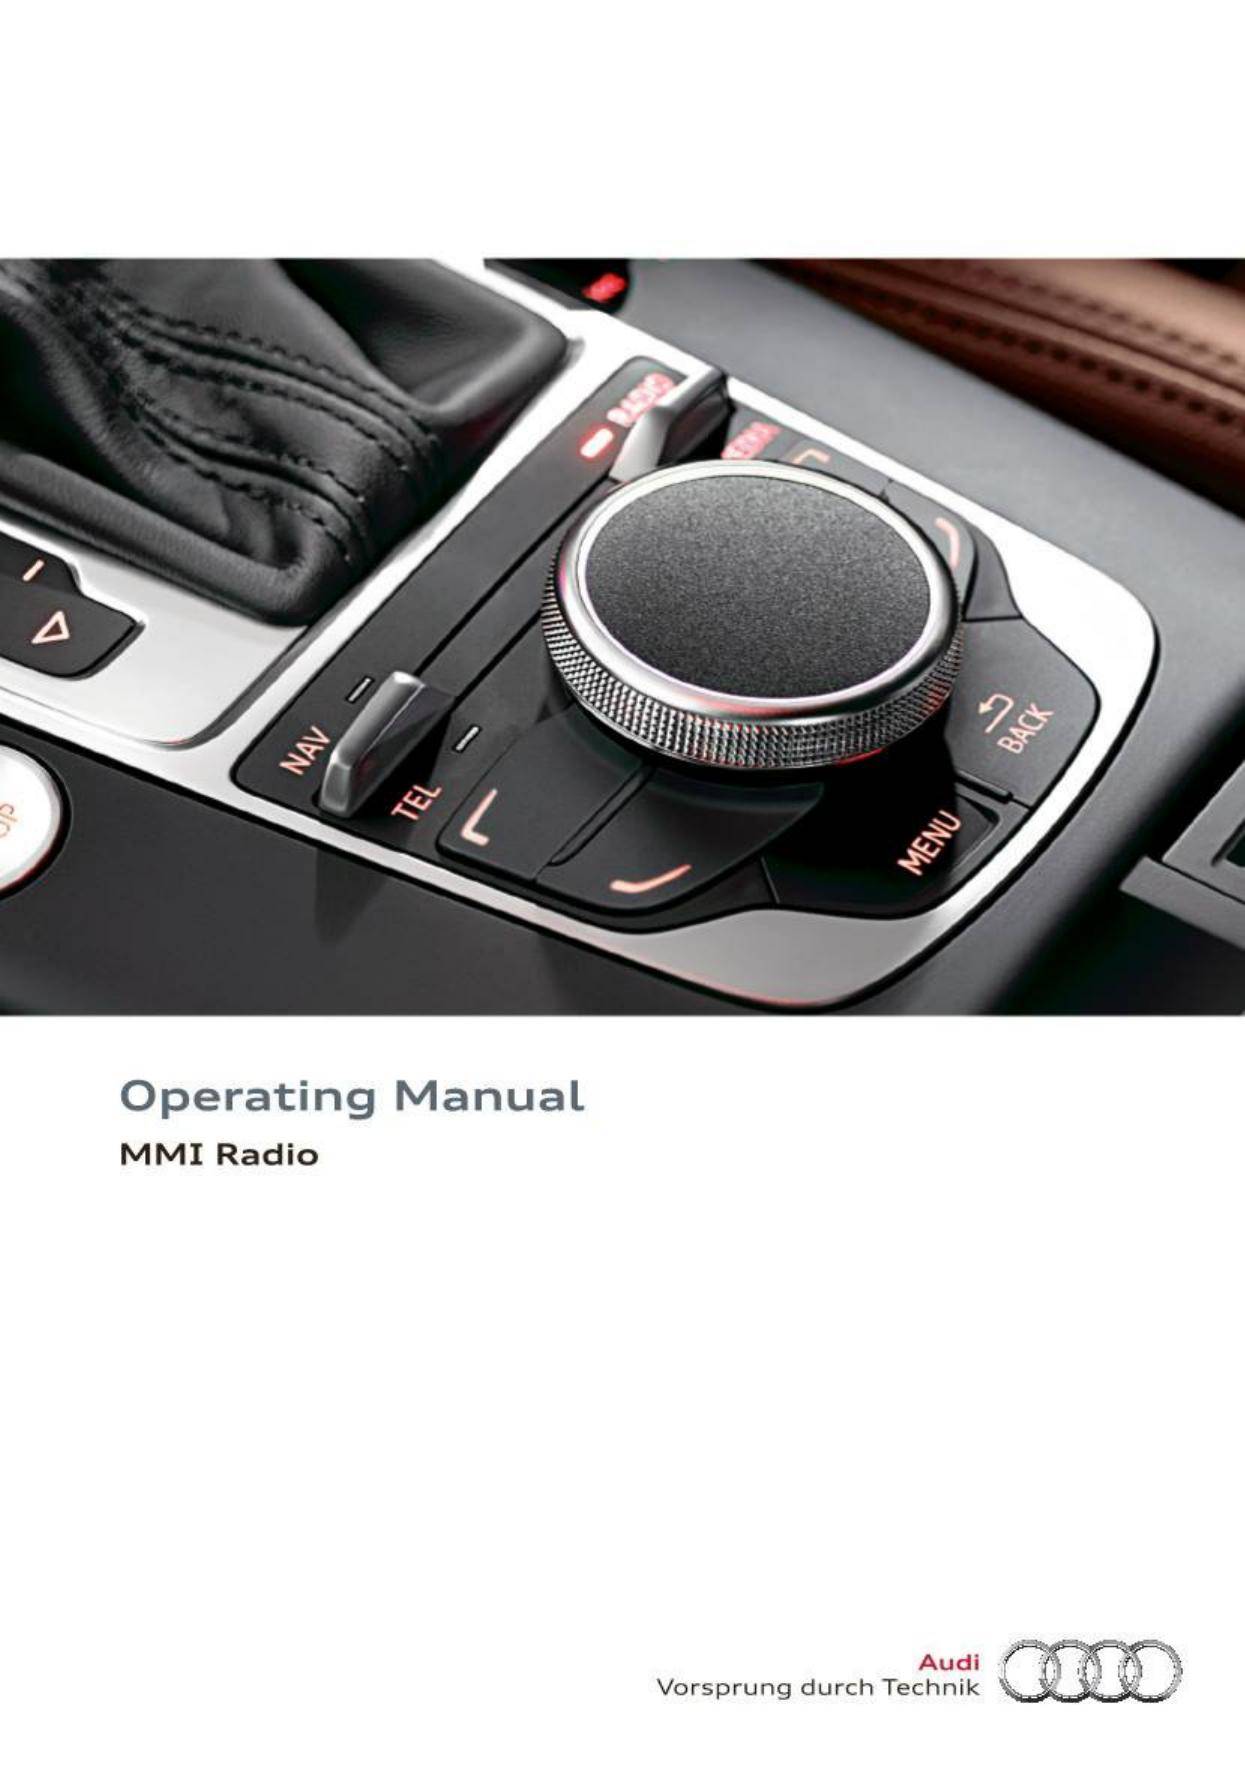 Audi a3 manual download pdf